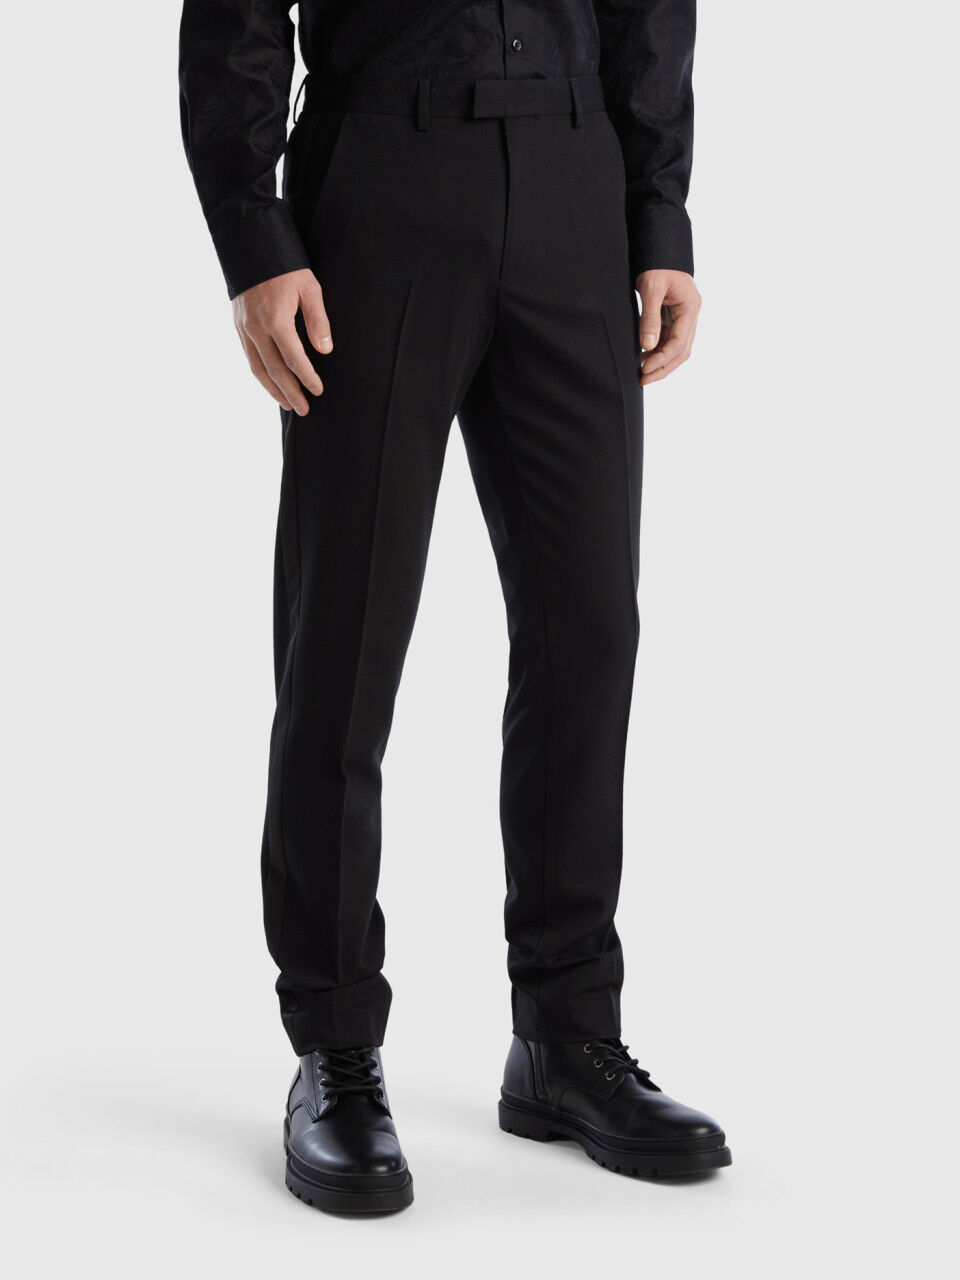 Elegant Fashionista Men Trousers Name: Elegant Fashionista Men Trousers  Fabric: Cotton Net Quantity (N): 1